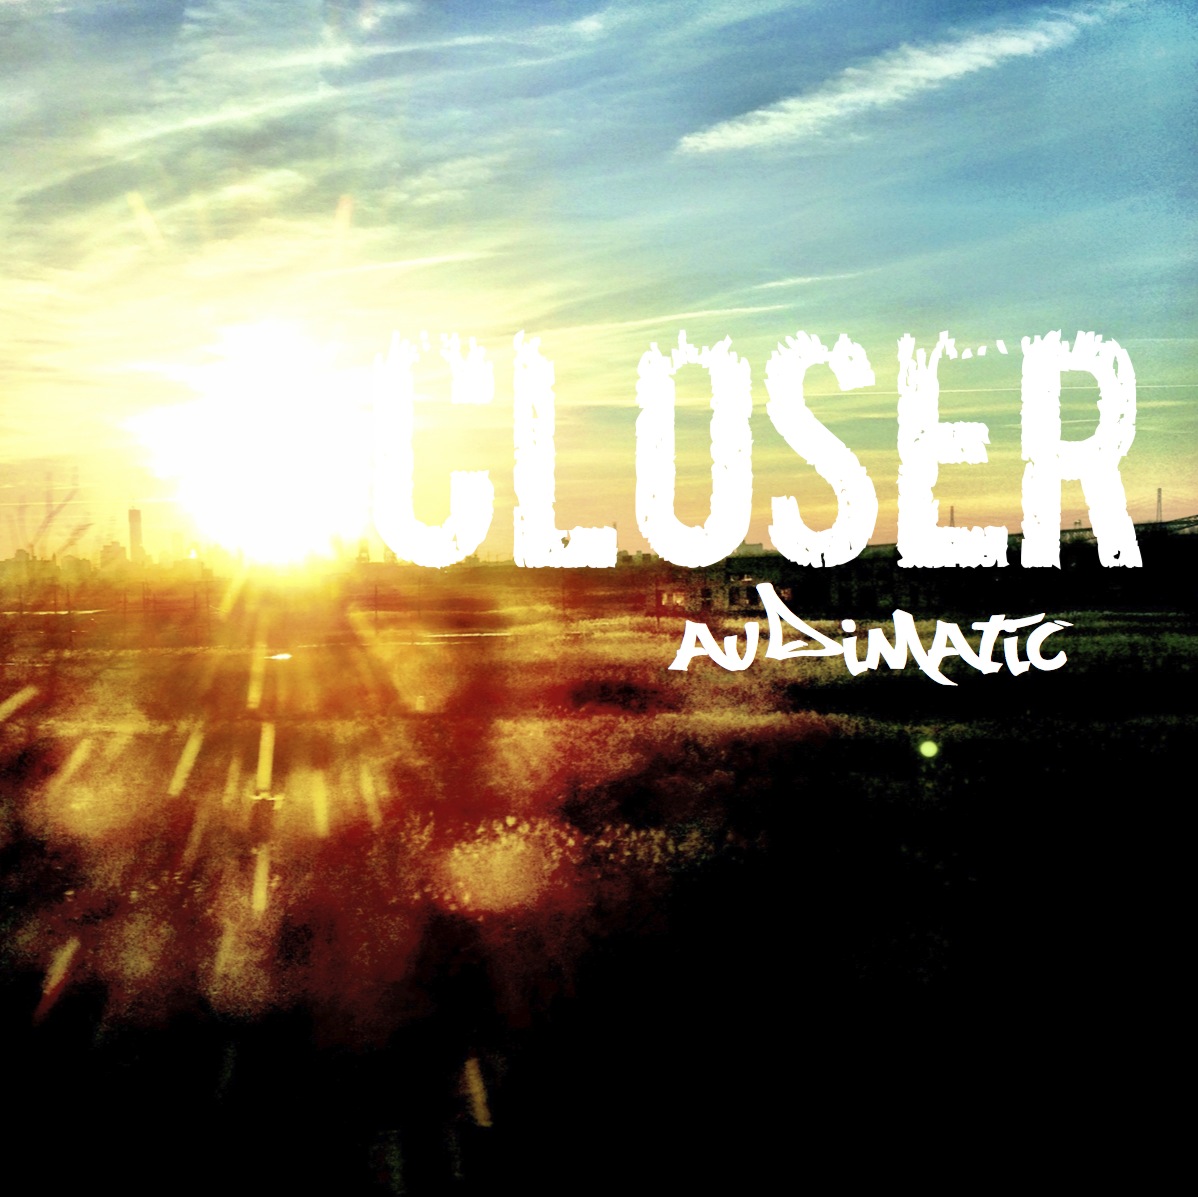 Audimatic (Audible Doctor x Maticulous) "Closer" | @AudibleDoctor @Maticulous